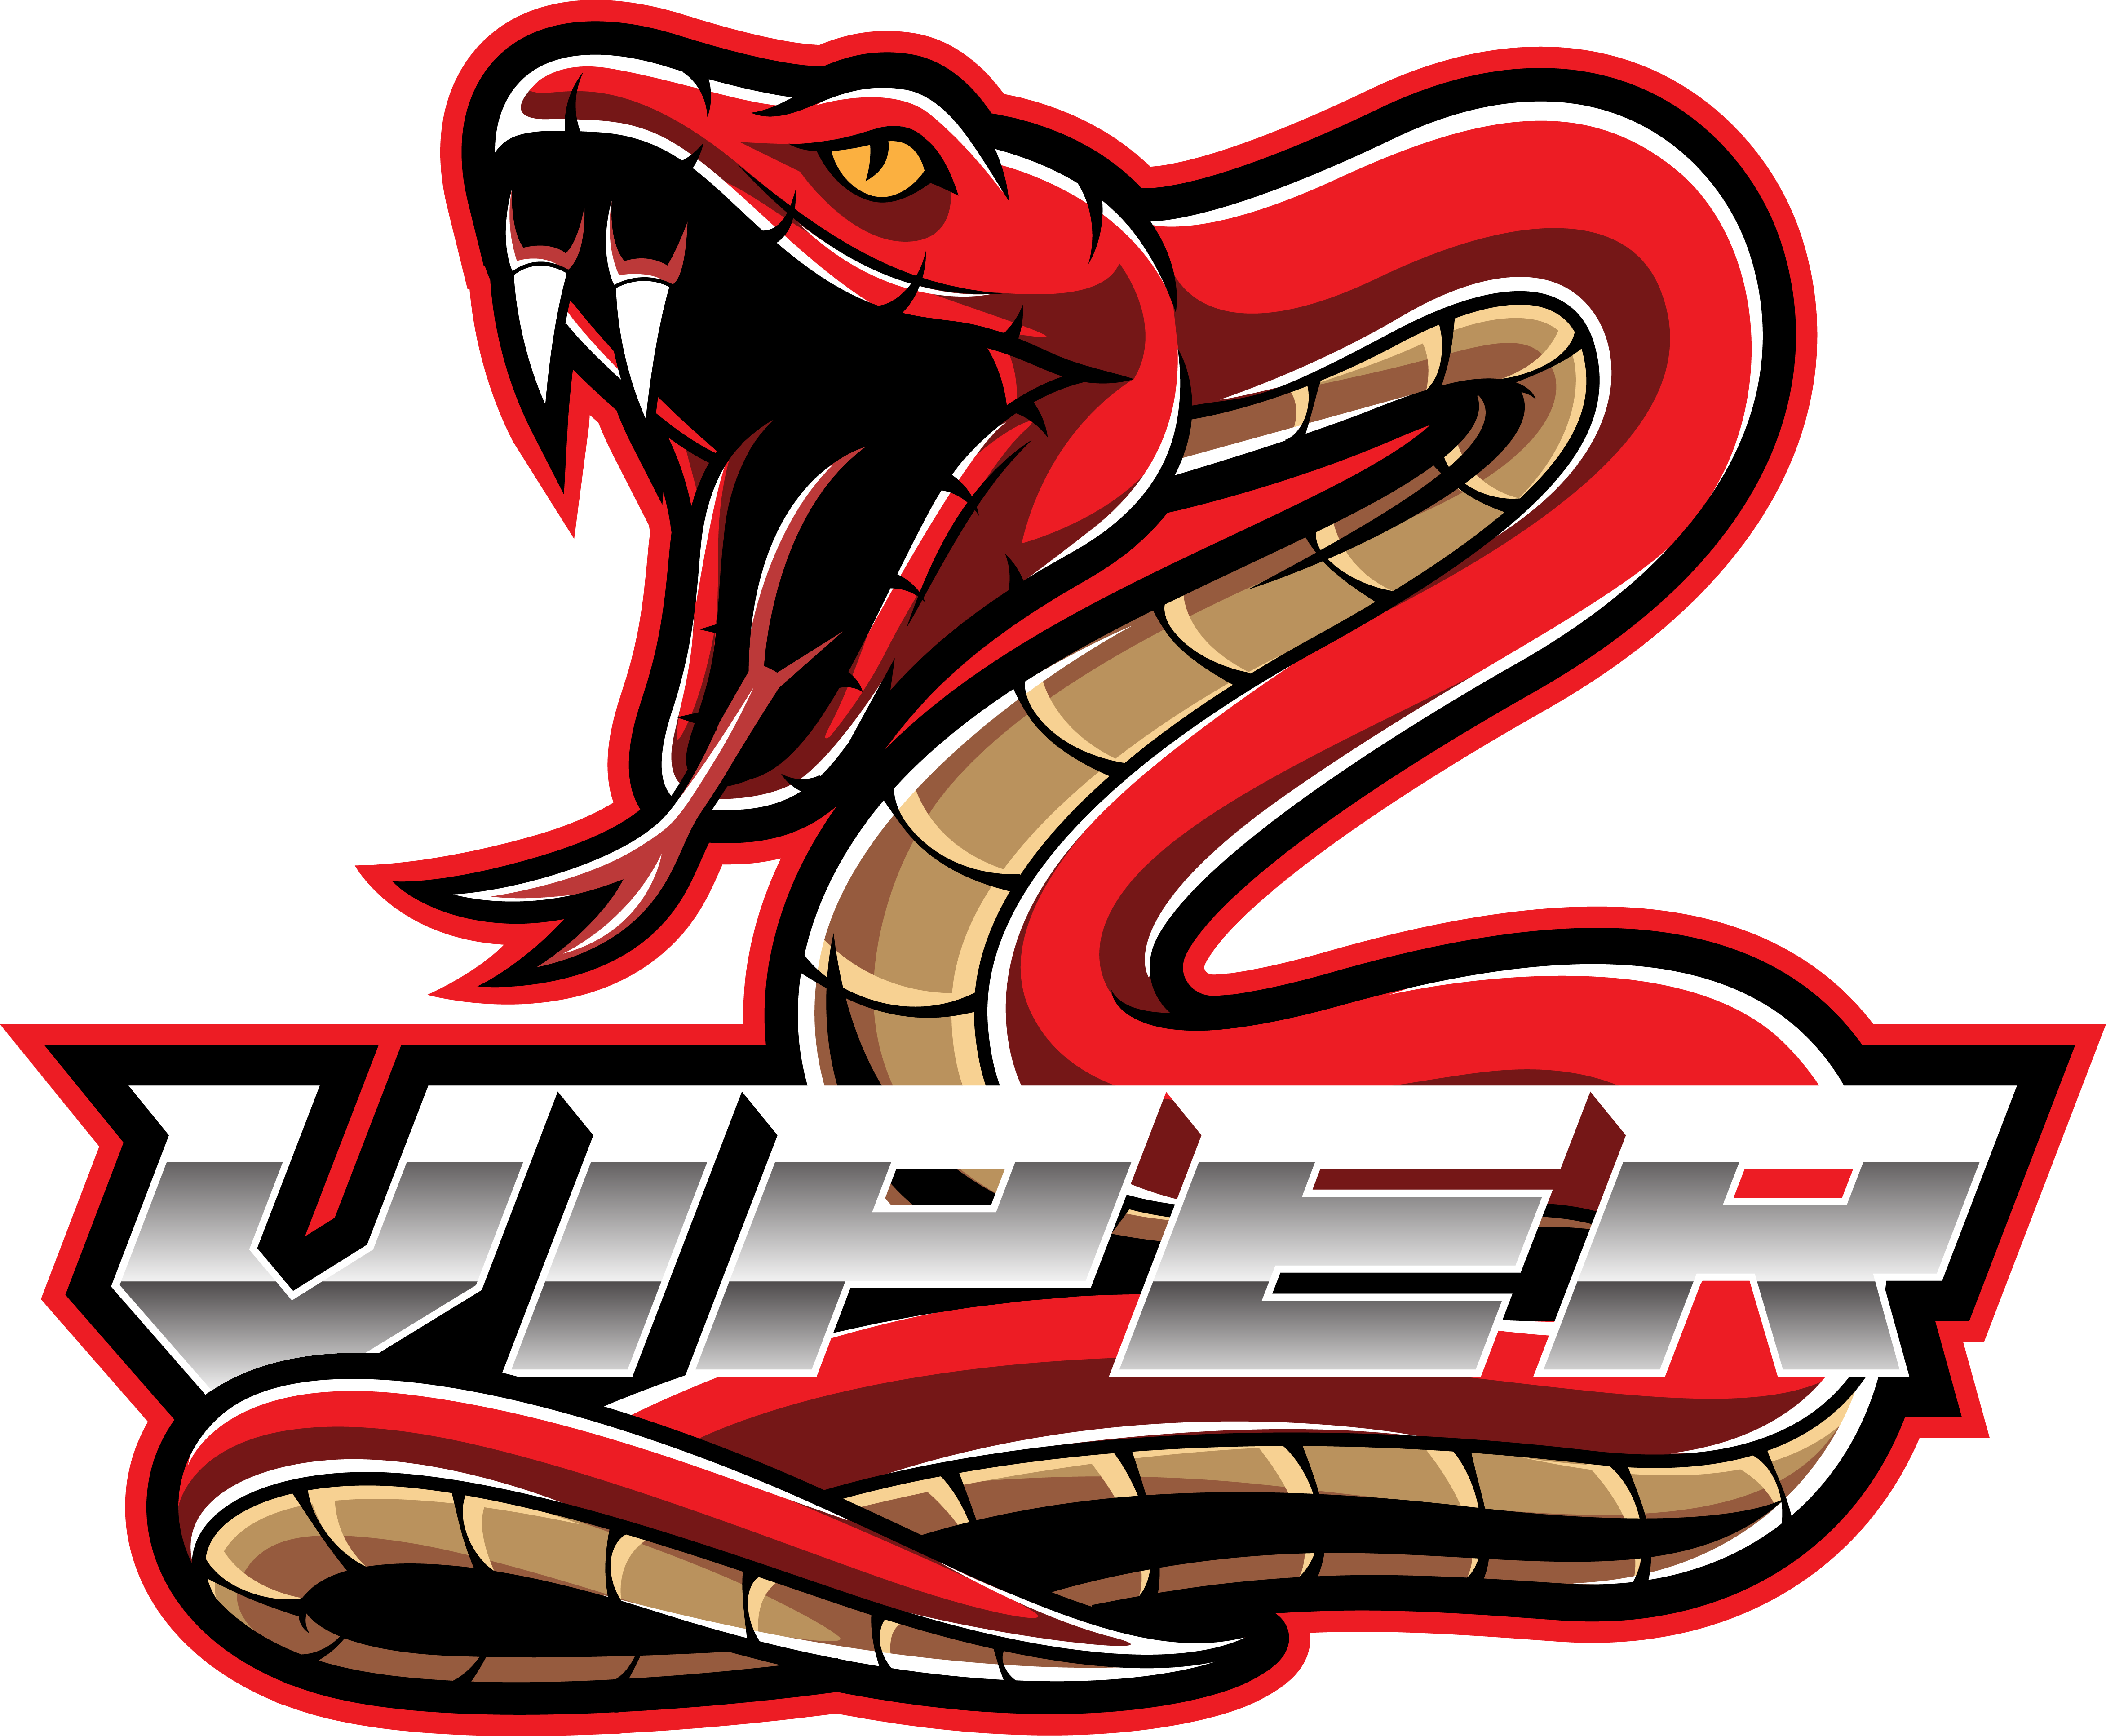 Viper snake mascot logo design By Visink | TheHungryJPEG.com
 Sea Serpent Logo